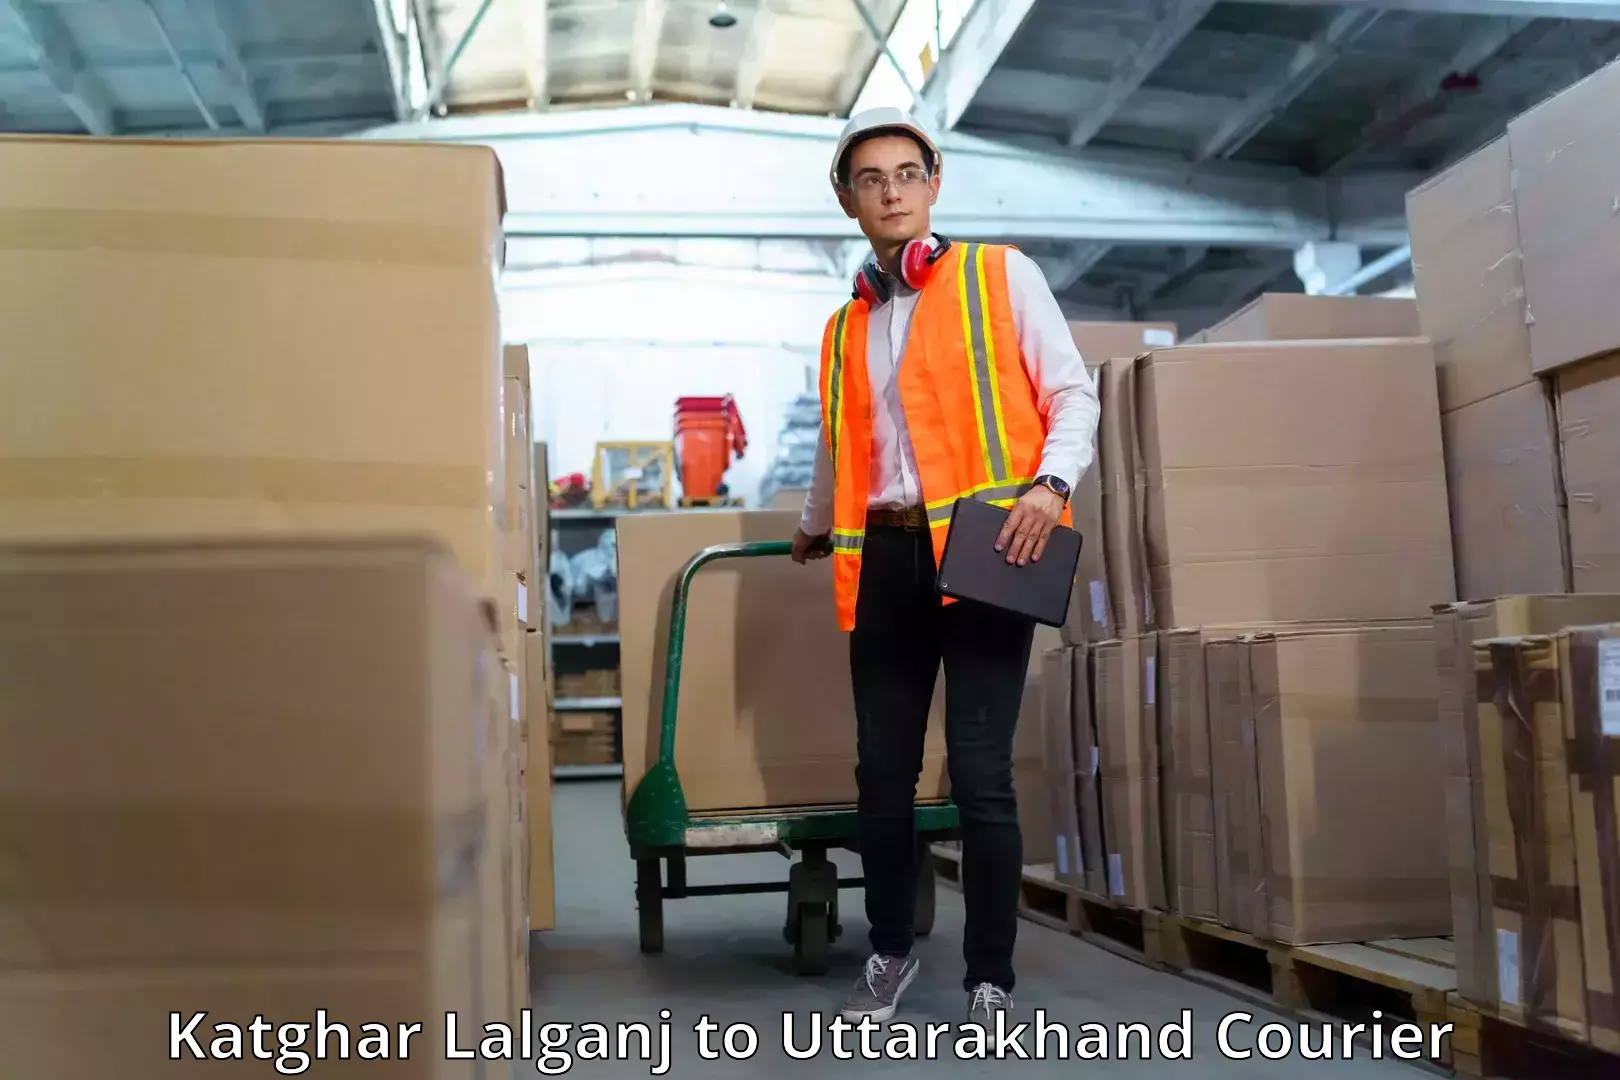 Sustainable courier practices Katghar Lalganj to Uttarakhand